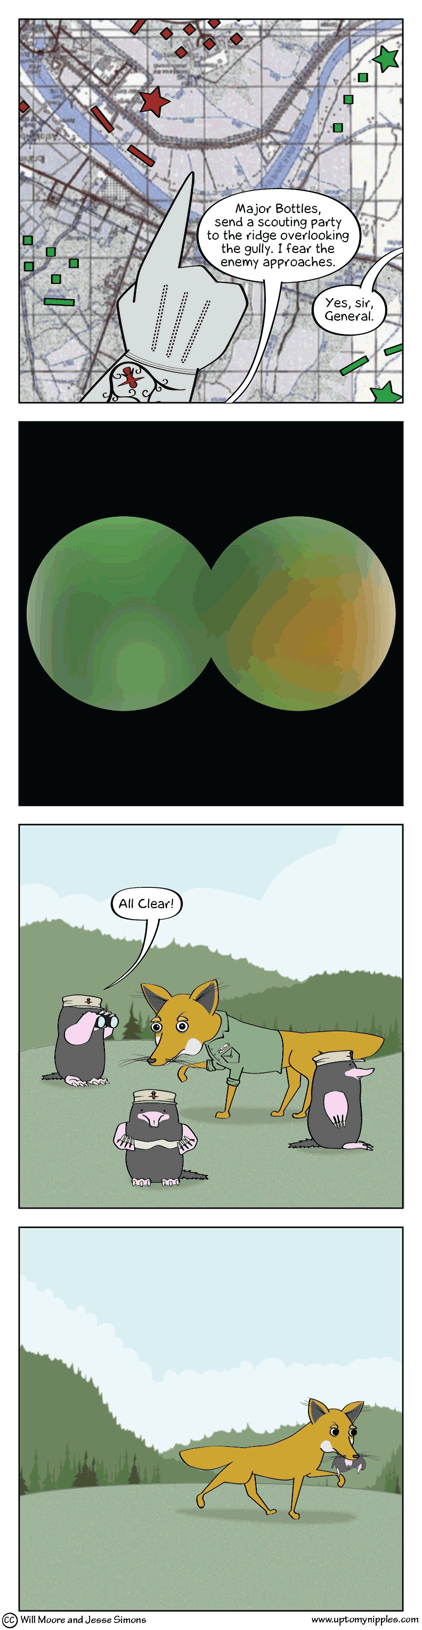 Foxhole comic